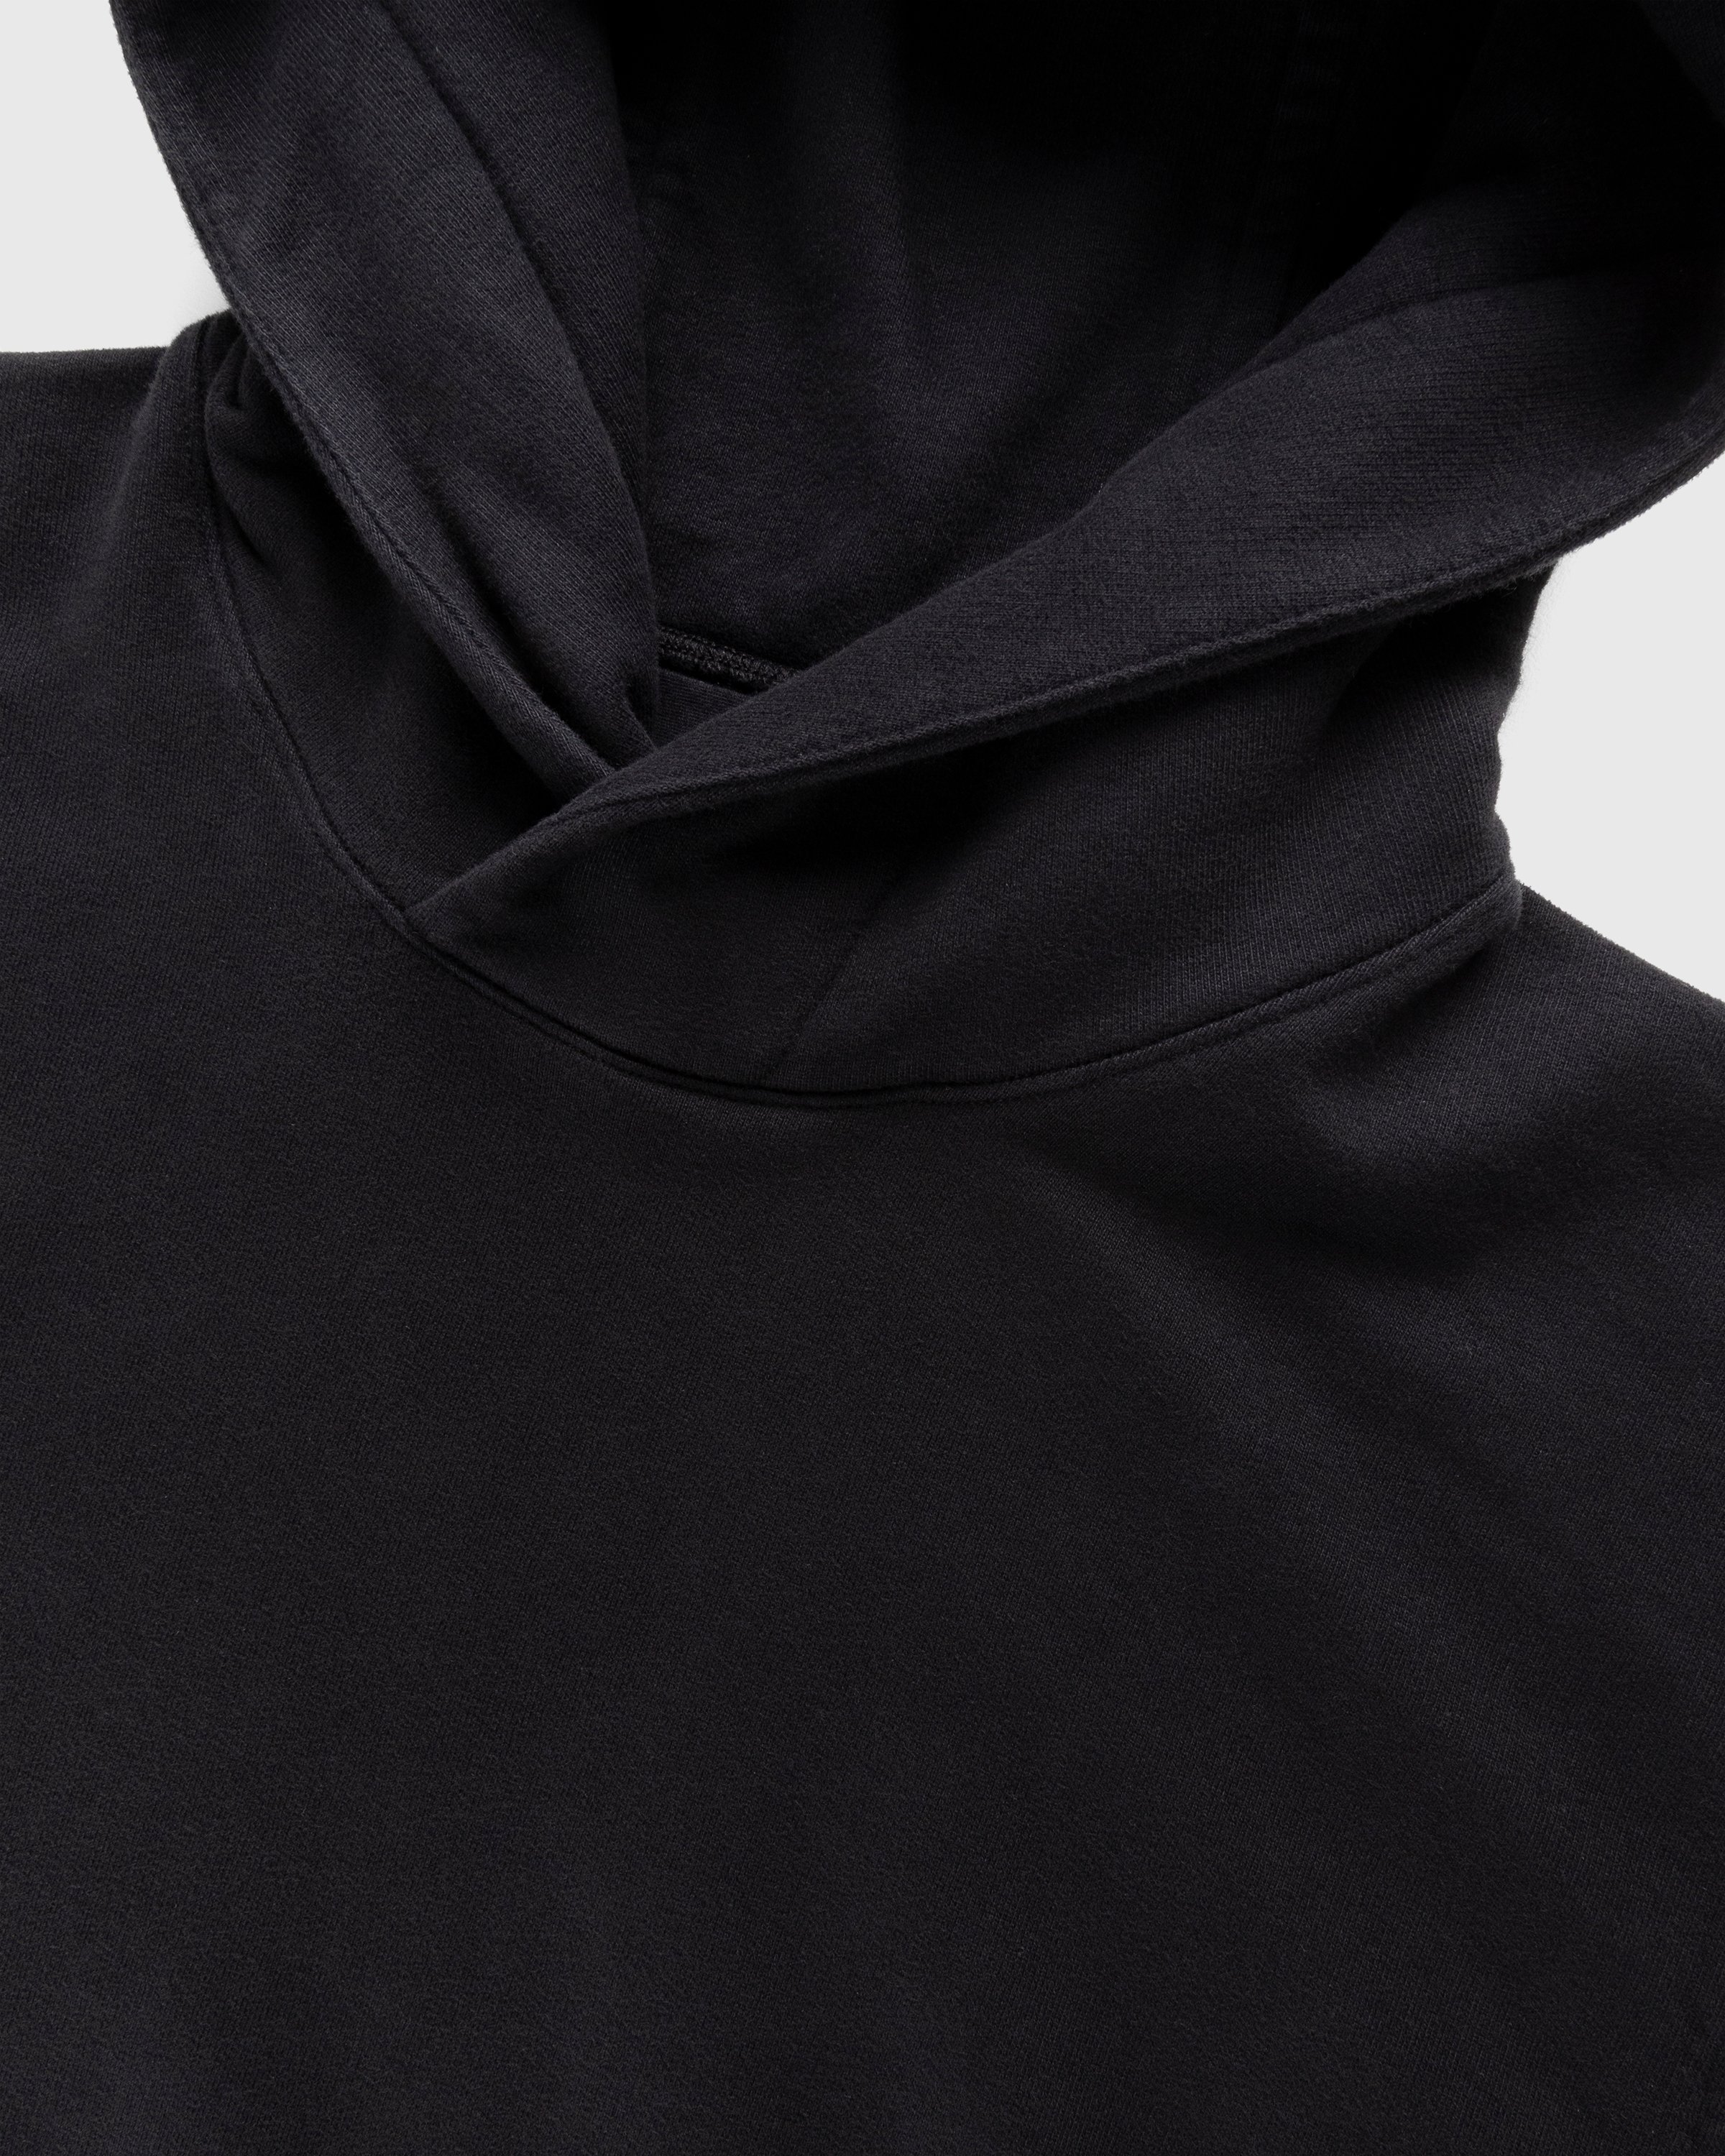 Stone Island - Garment-Dyed Fleece Hoodie Black - Clothing - Black - Image 3